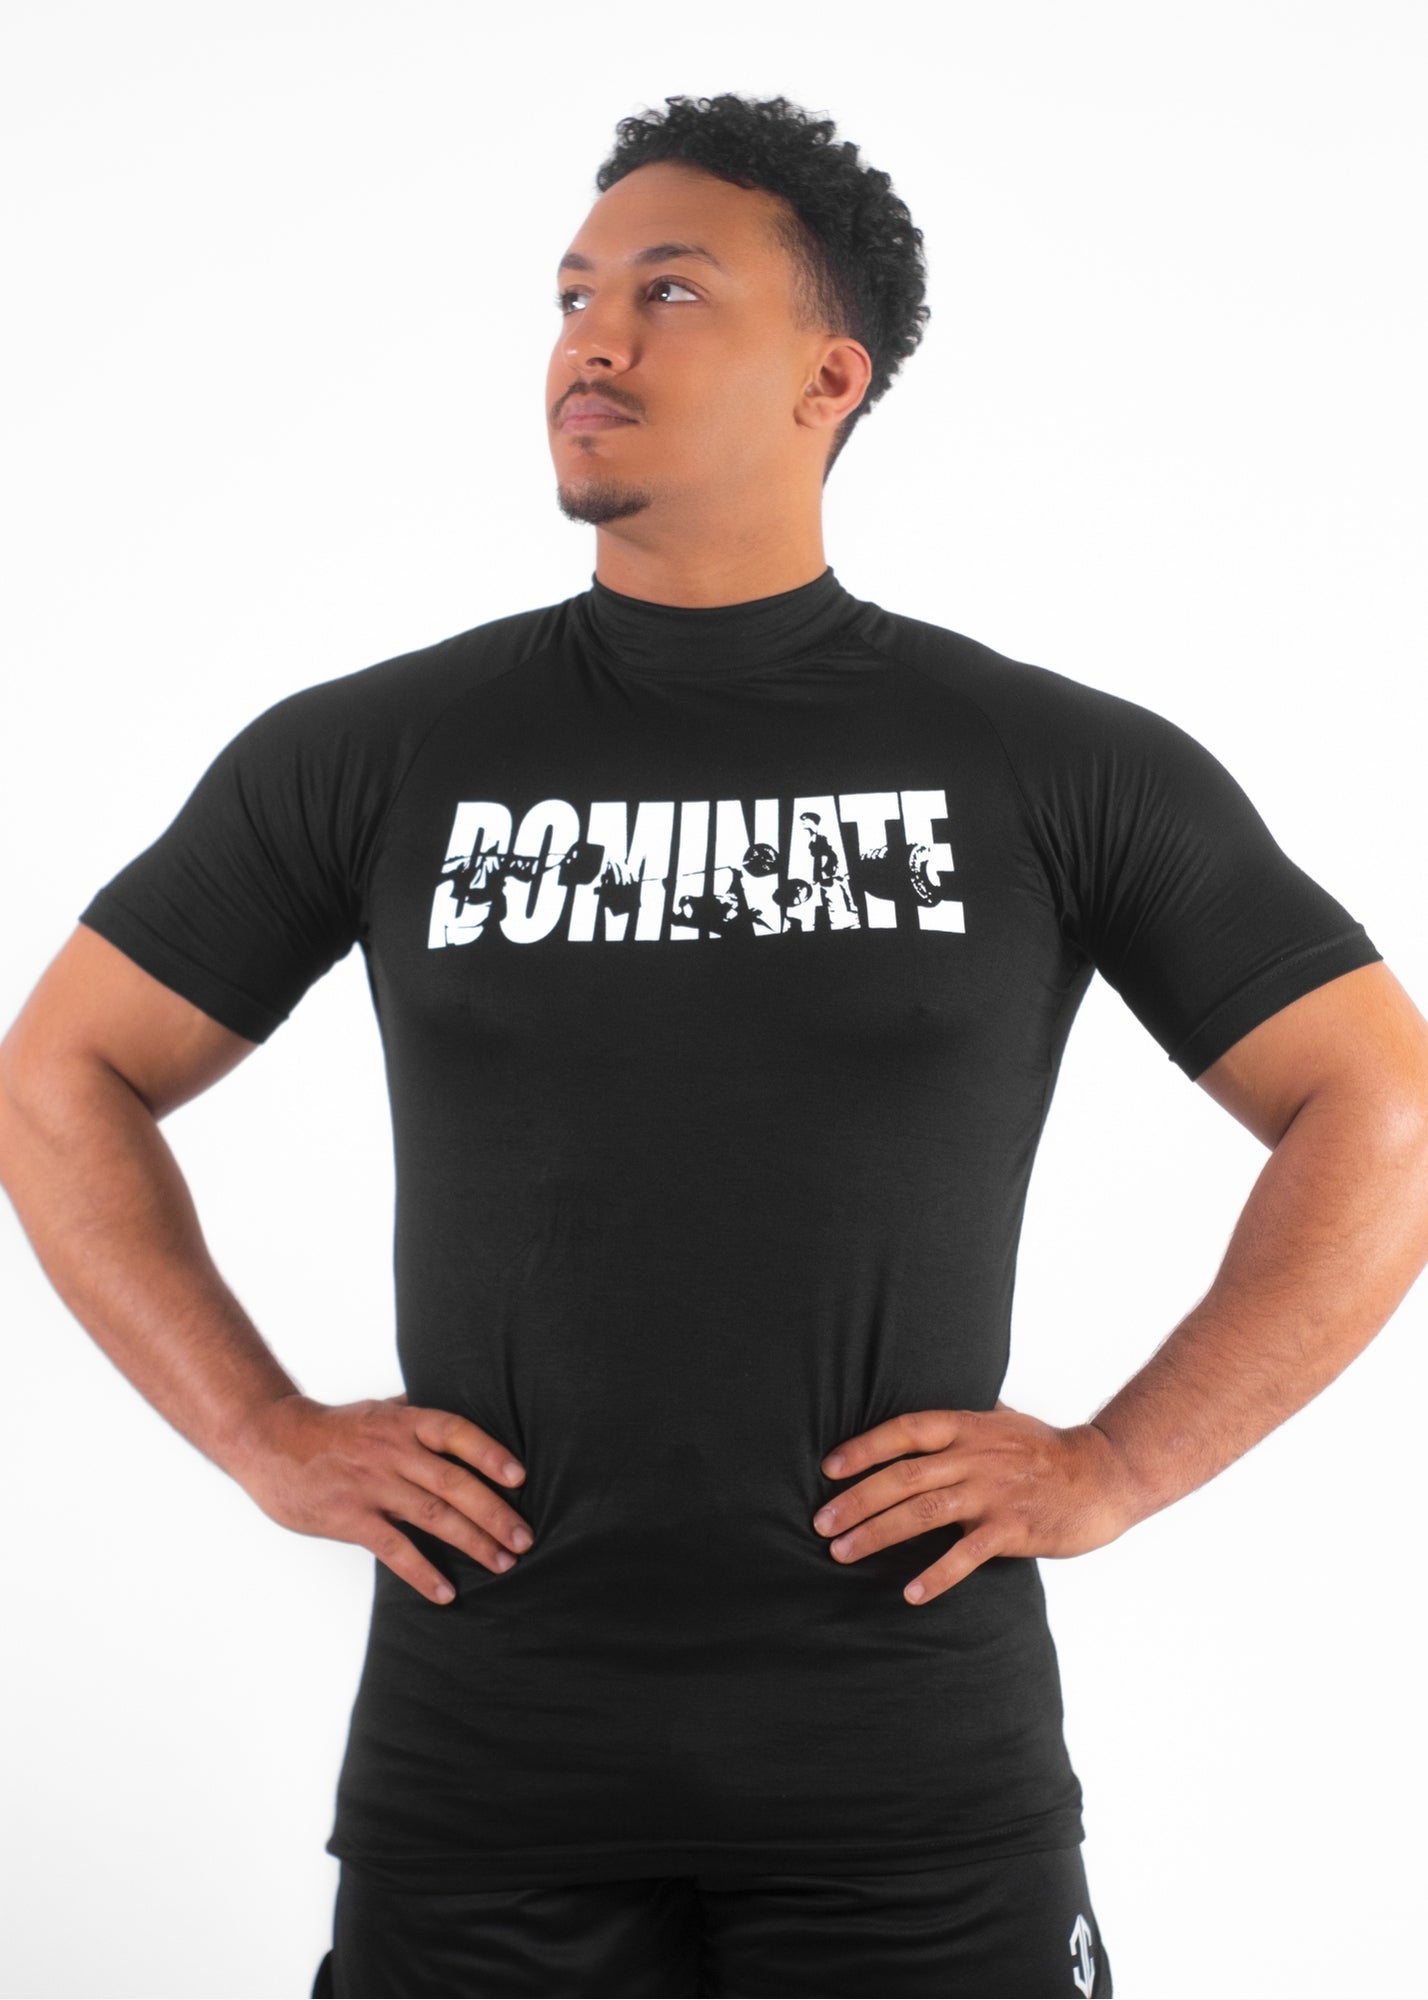 APEX™ Compression T-Shirt “DOMINATE” – BLACK